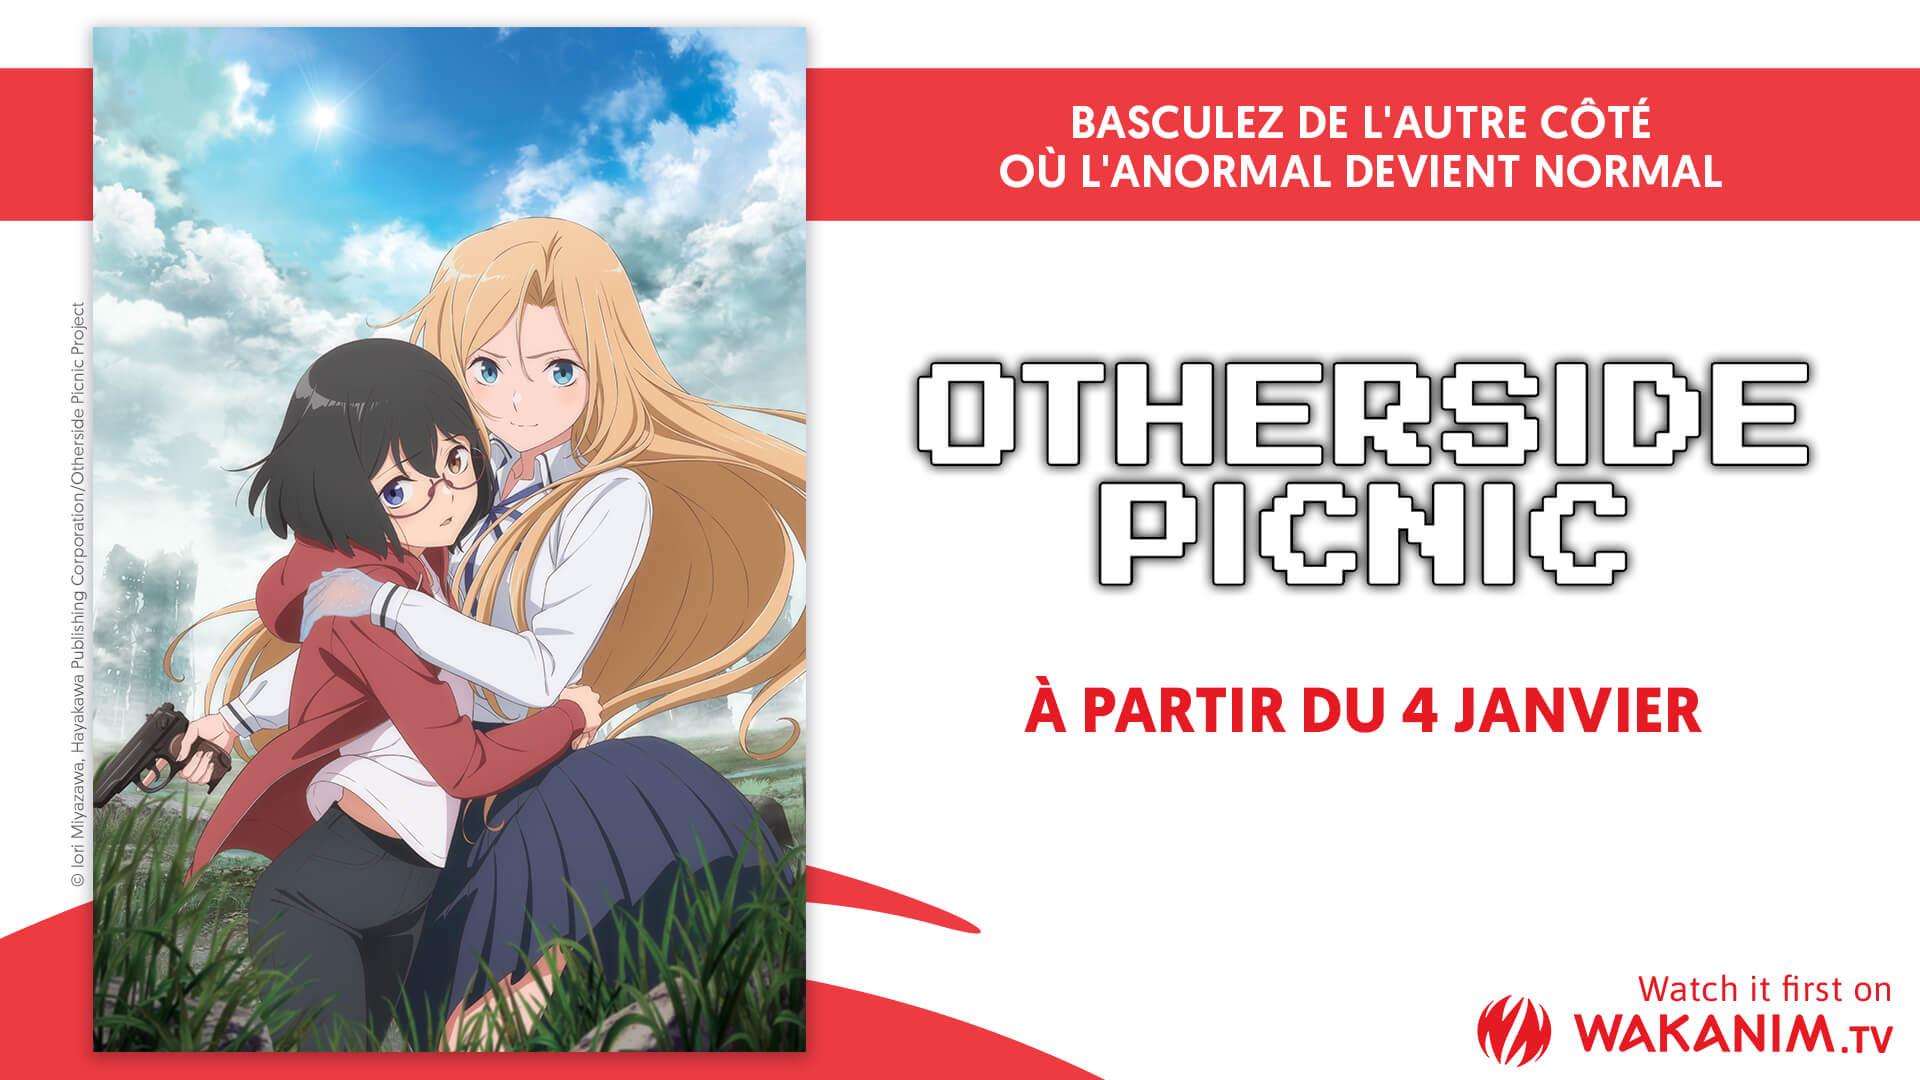 Novel Series 'Urasekai Picnic' Gets TV Anime Adaptation - Forums